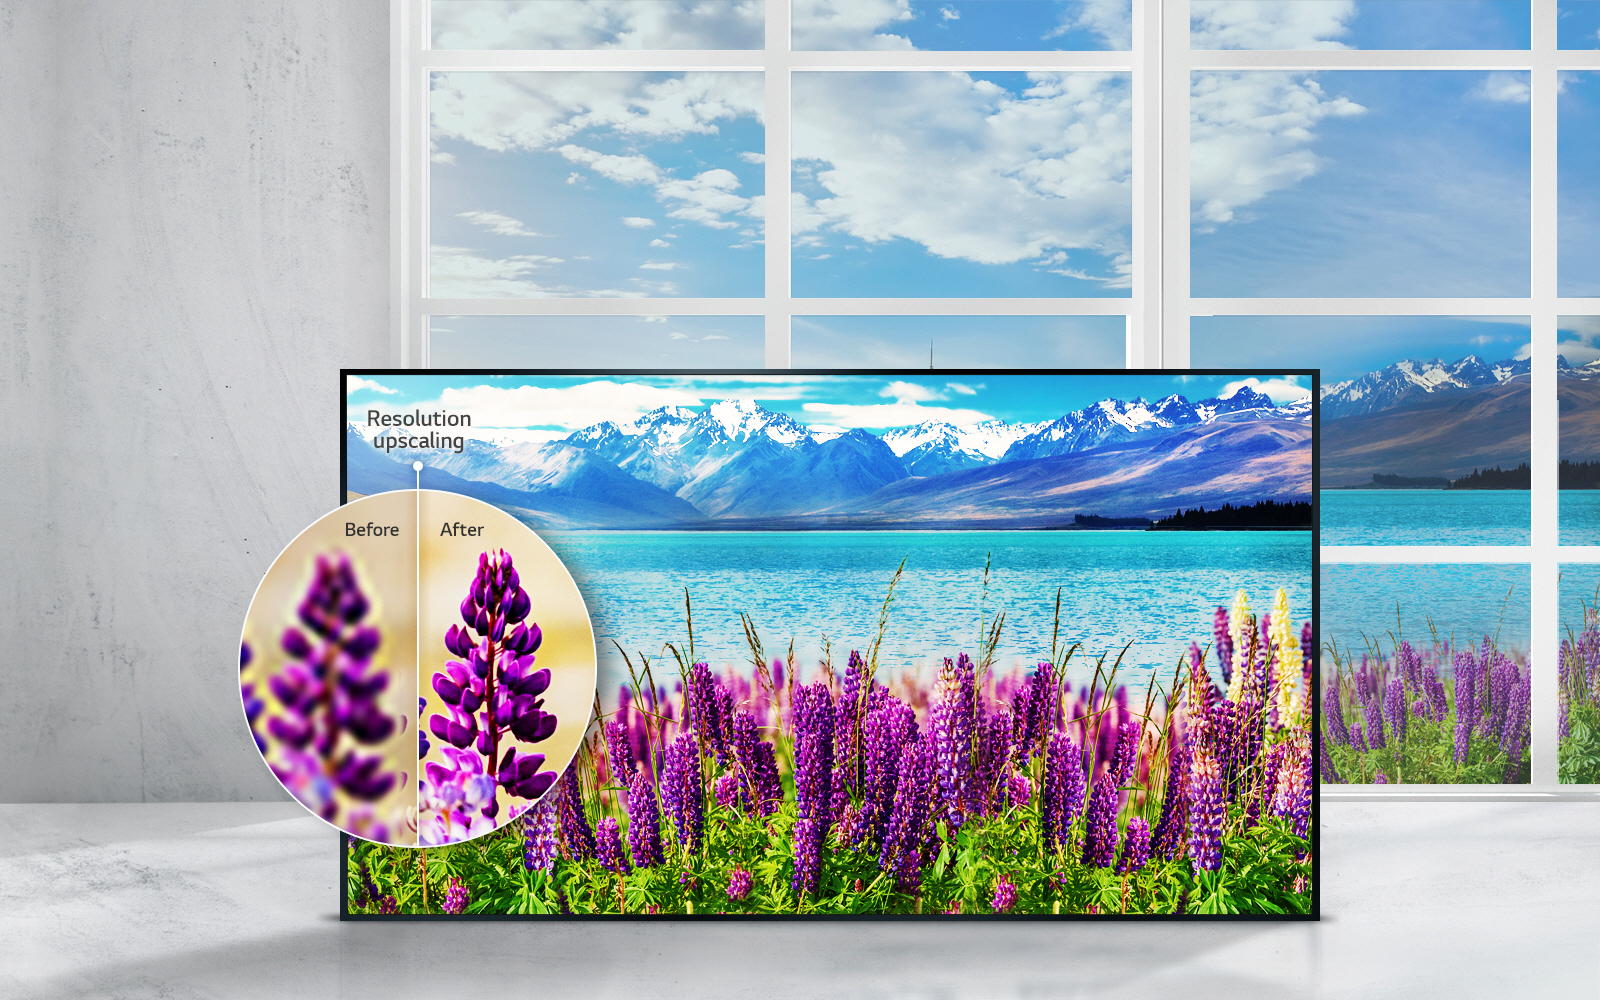 LG 55UJ630V 55″ 140 Ekran 4K UHD Uydu Alıcılı Smart Led Tv 